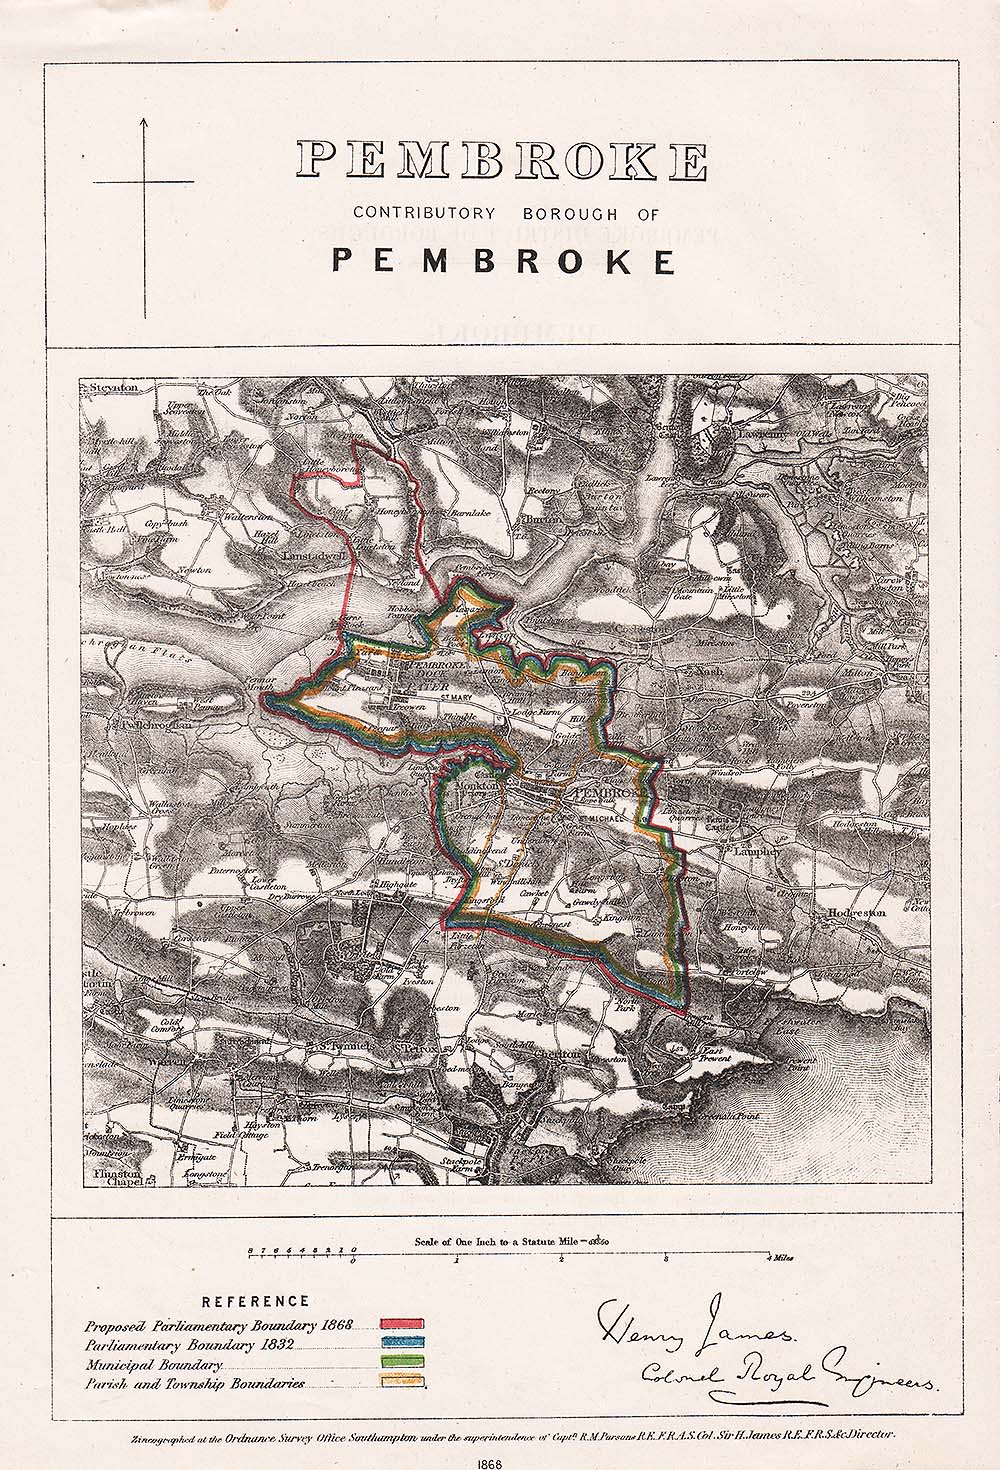 Contributory Borough of Pembroke